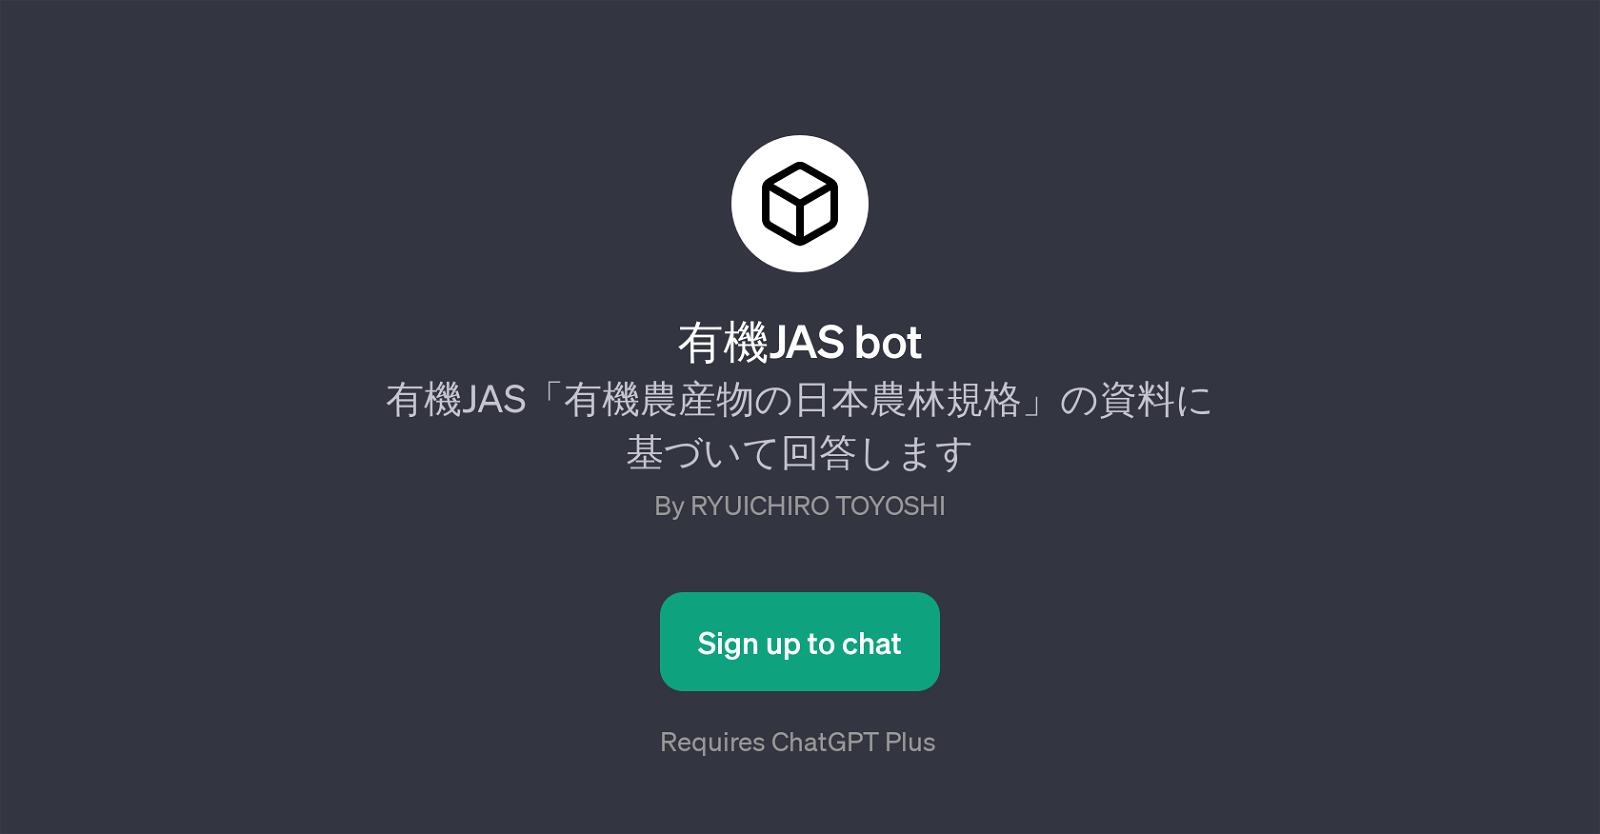 JAS bot website